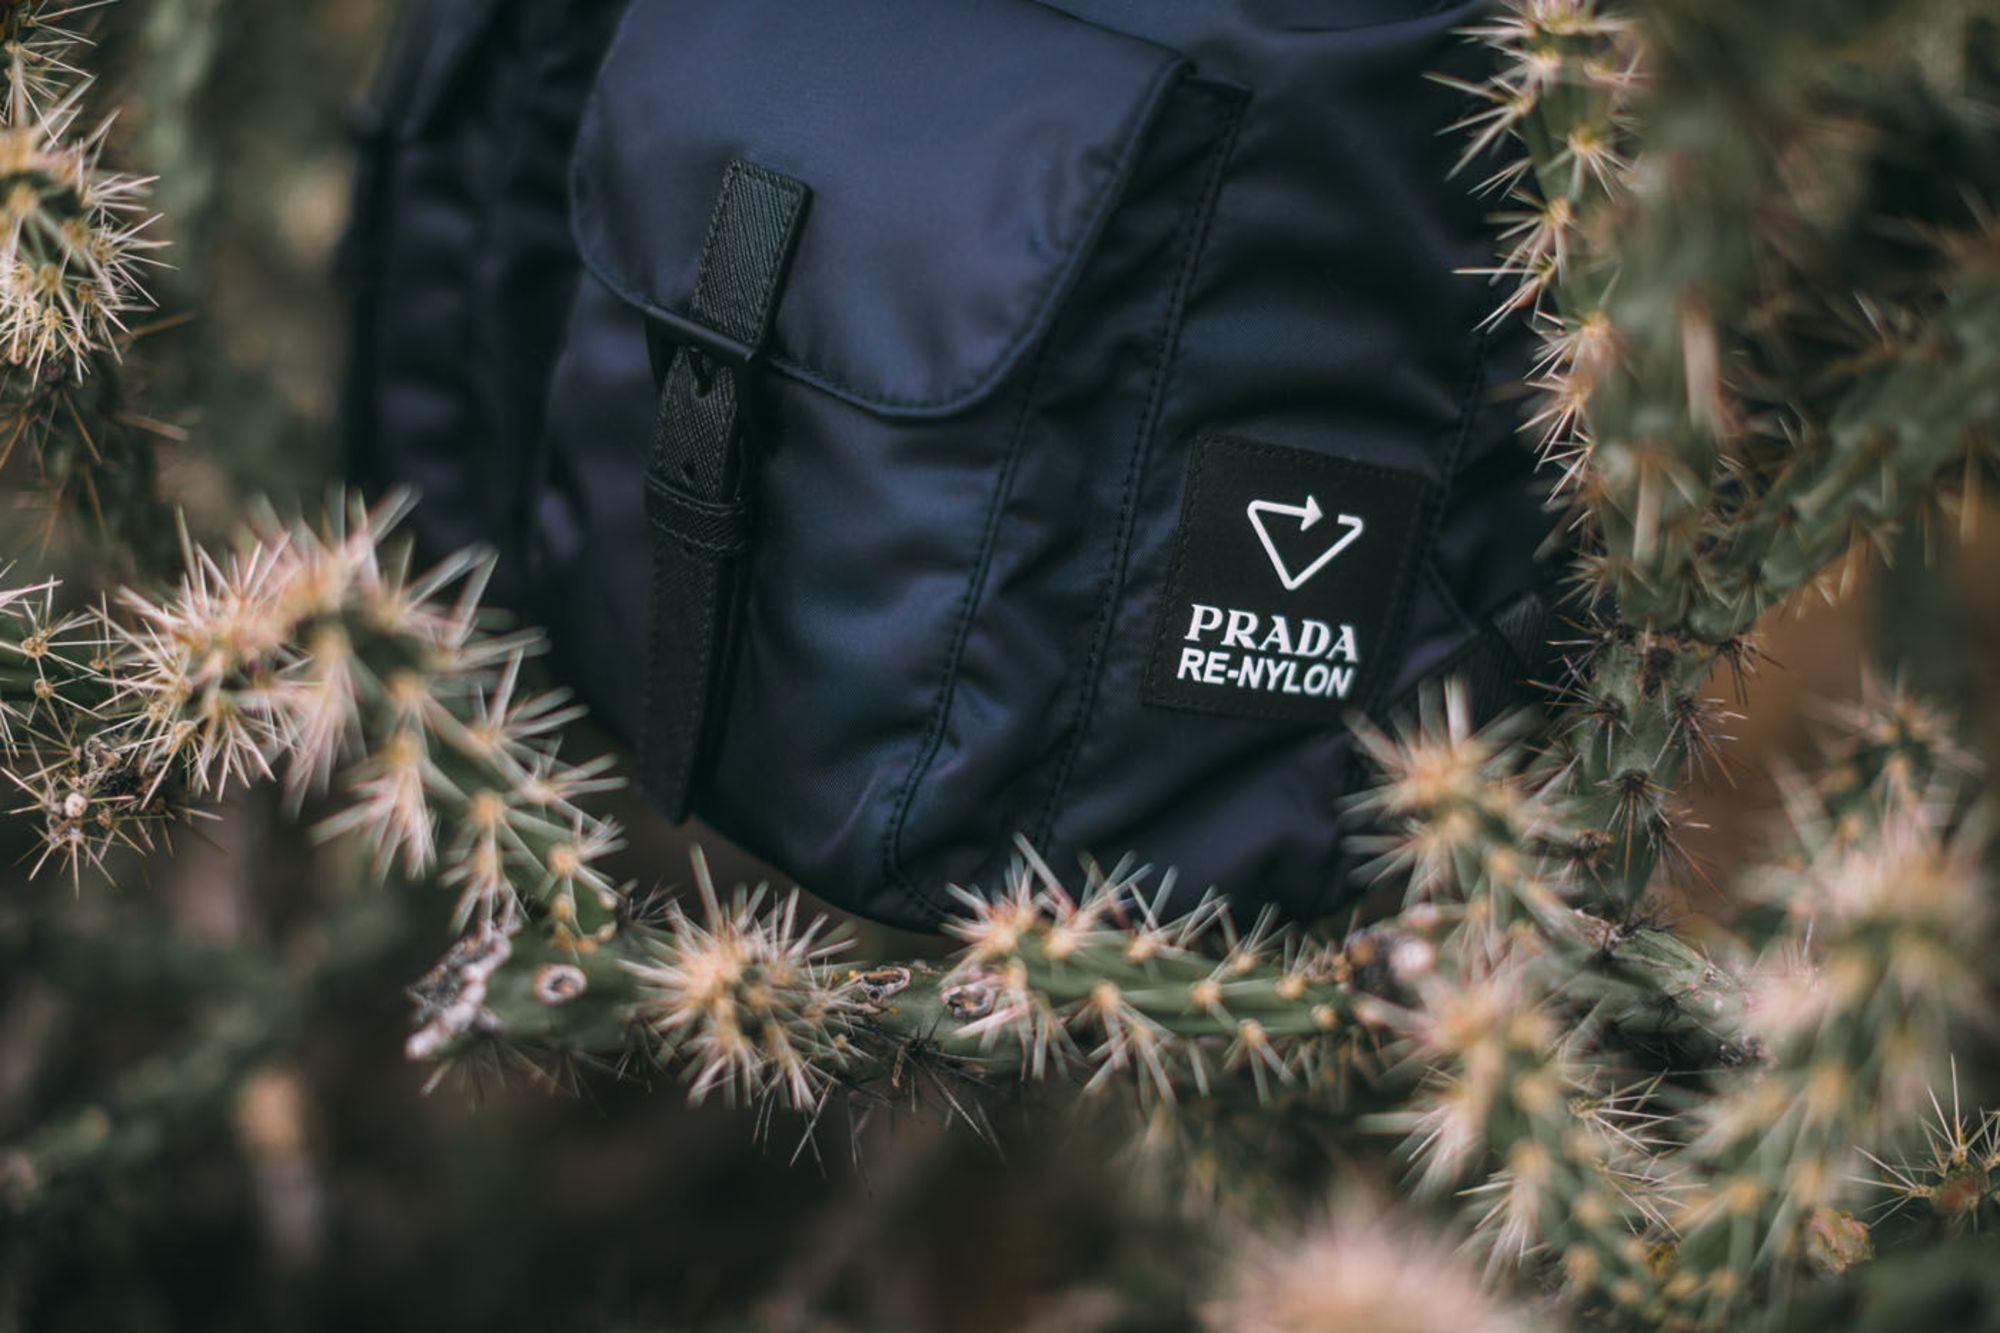 Prada Re-Nylon #1 Arizona: the sustainable collection - Latestmagazine